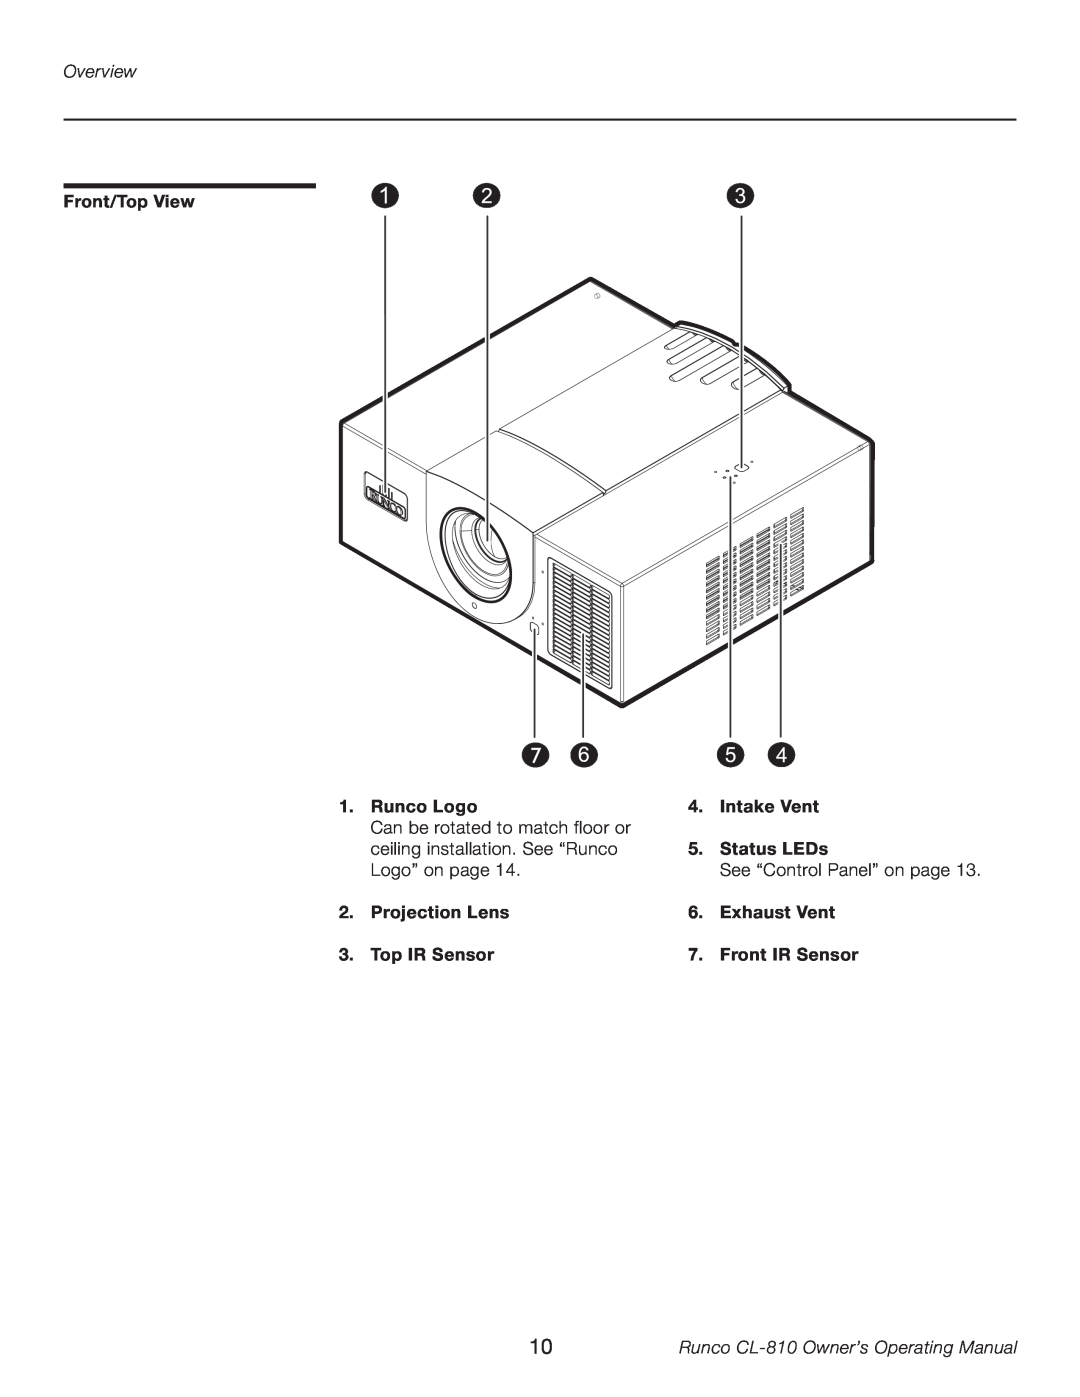 Runco CL-810 manual Overview, Front/Top View, Runco Logo, Projection Lens 3. Top IR Sensor, Intake Vent 5. Status LEDs 